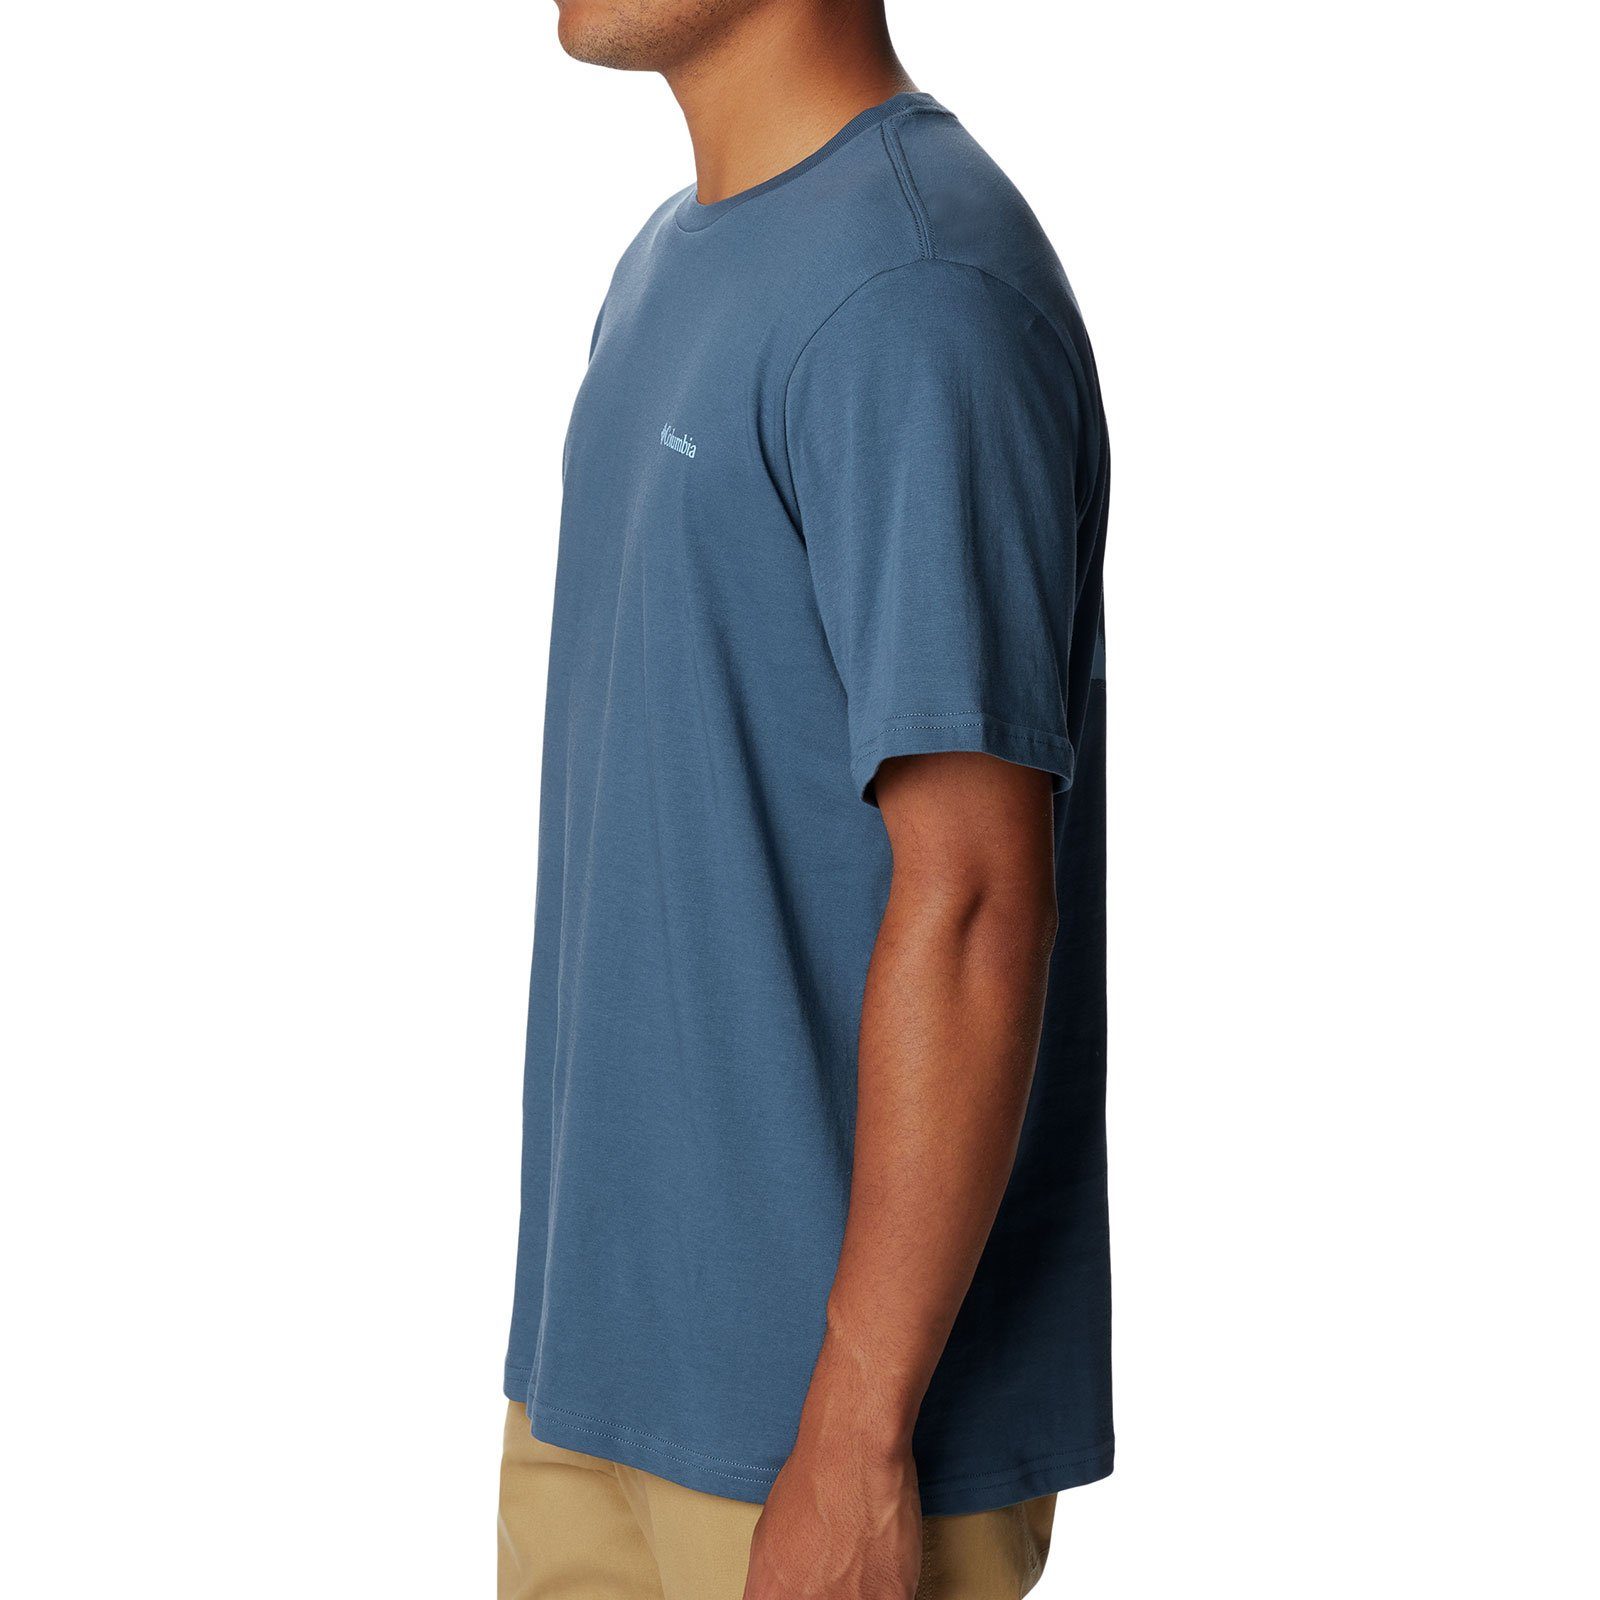 Back dark Kurzarmshirt River™ mit Rockaway Graphic mountain Rundhalsausschnitt Columbia 480 T-Shirt